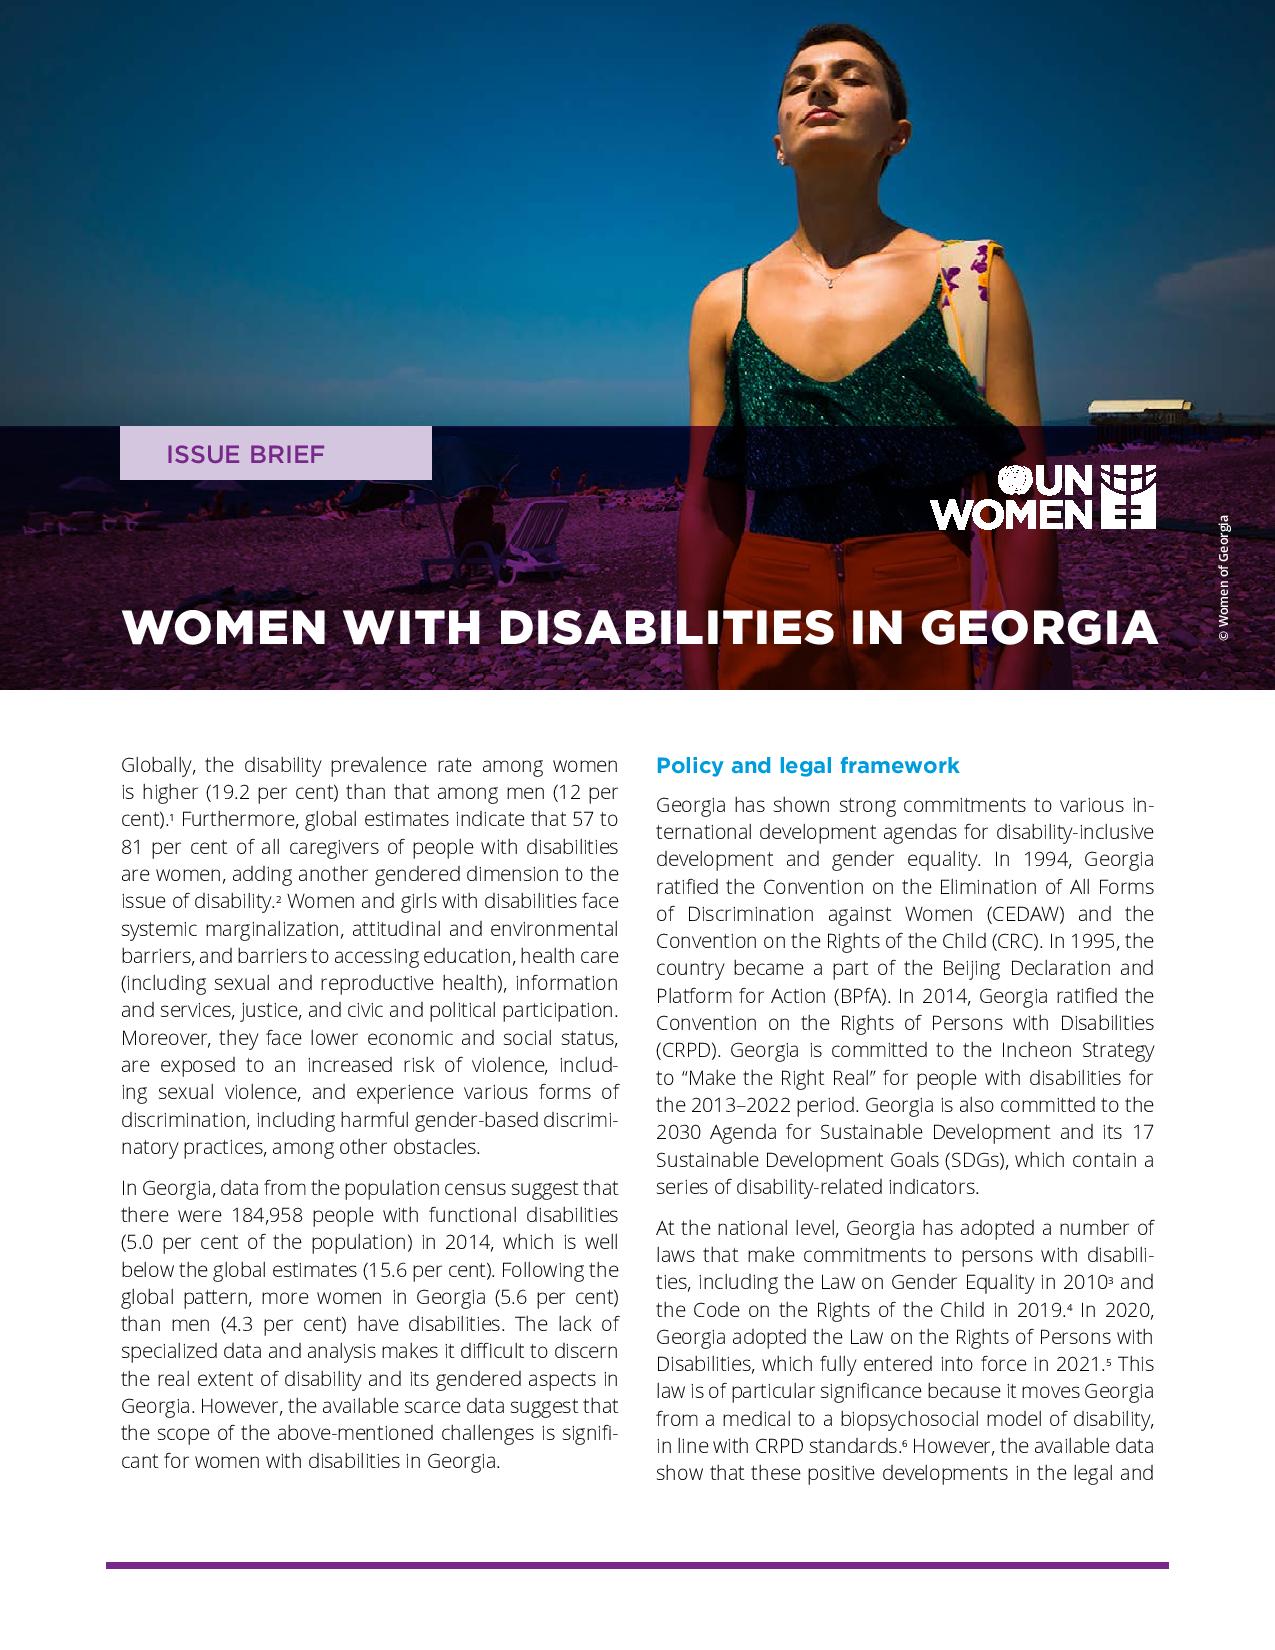 Women with disabilities in Georgia. Photo: Women of Georgia